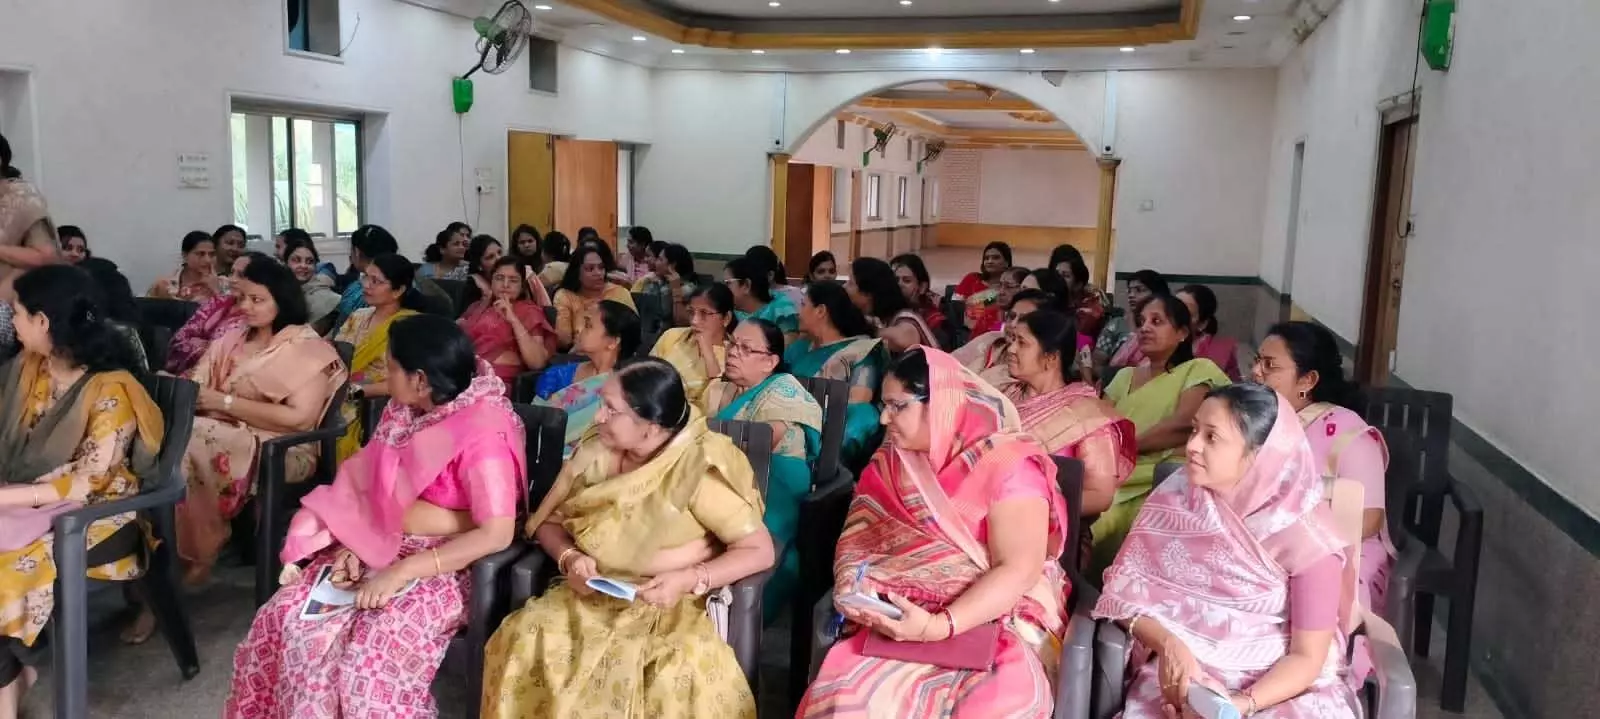 भगवान महावीर जन्म कल्याणक महोत्सव समिति, महिला मंडलों की बैठक रखी गई